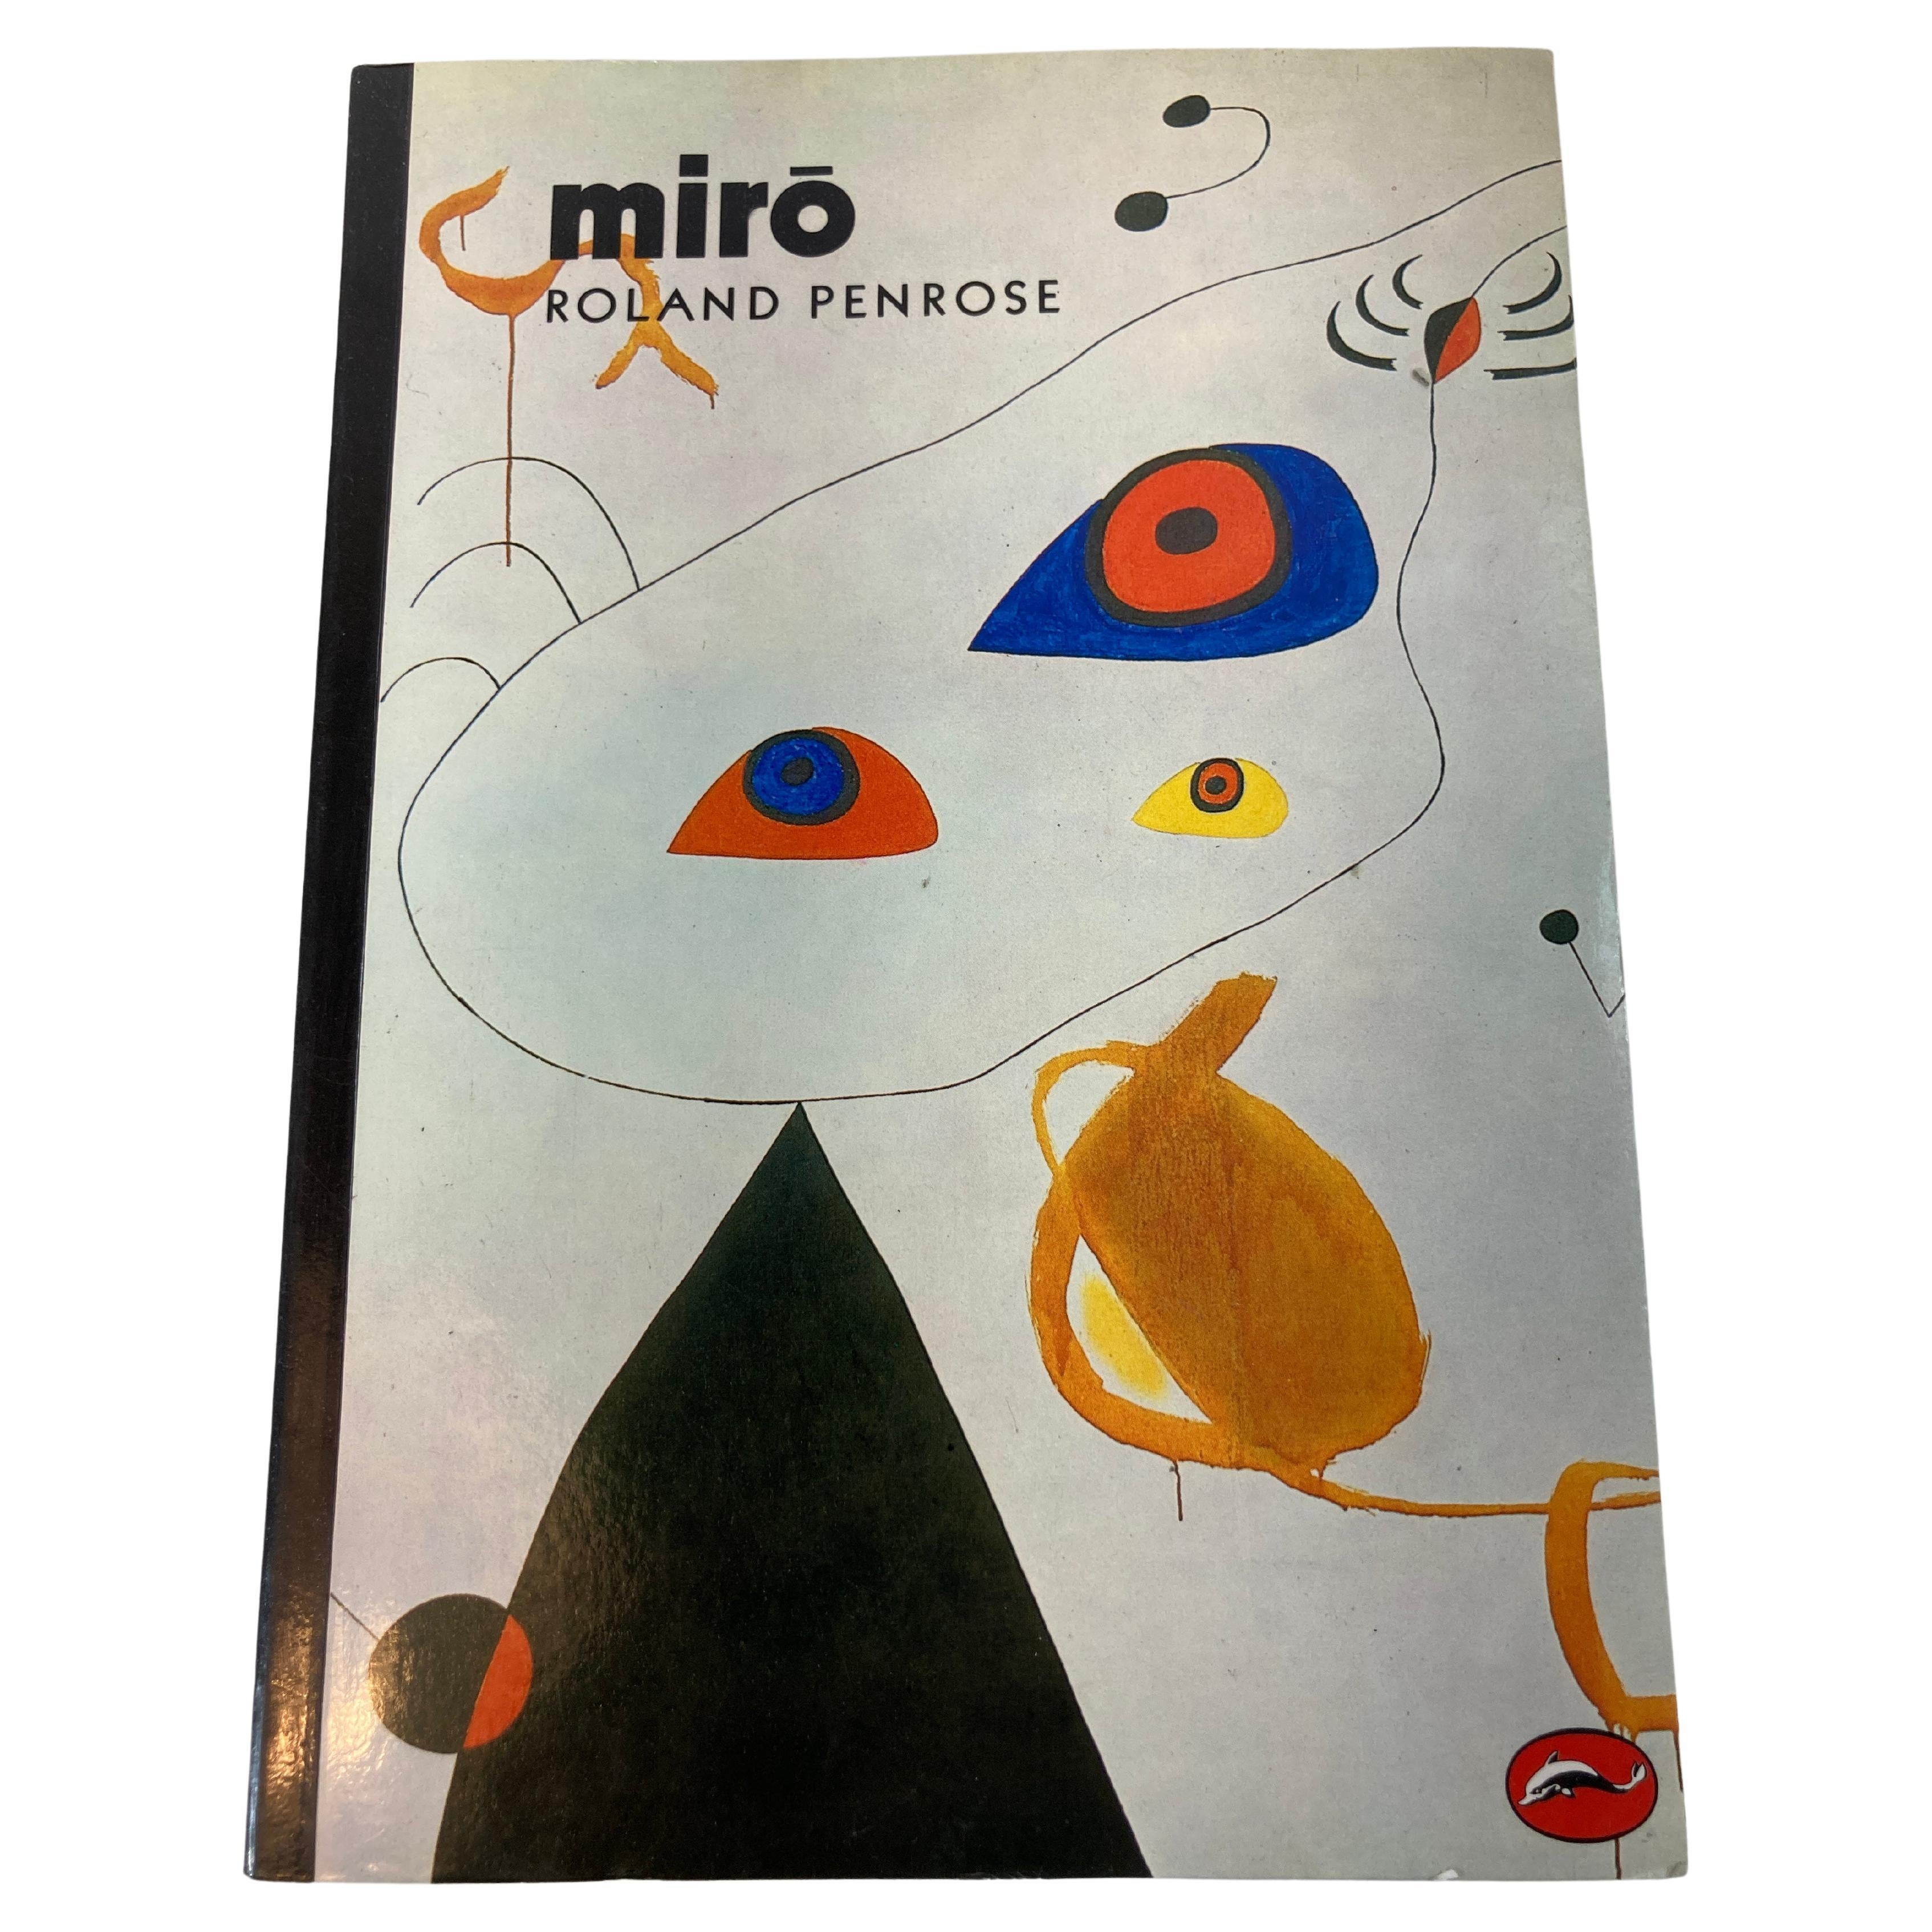 Miro World of Art Paperback 1985 by Roland Penrose